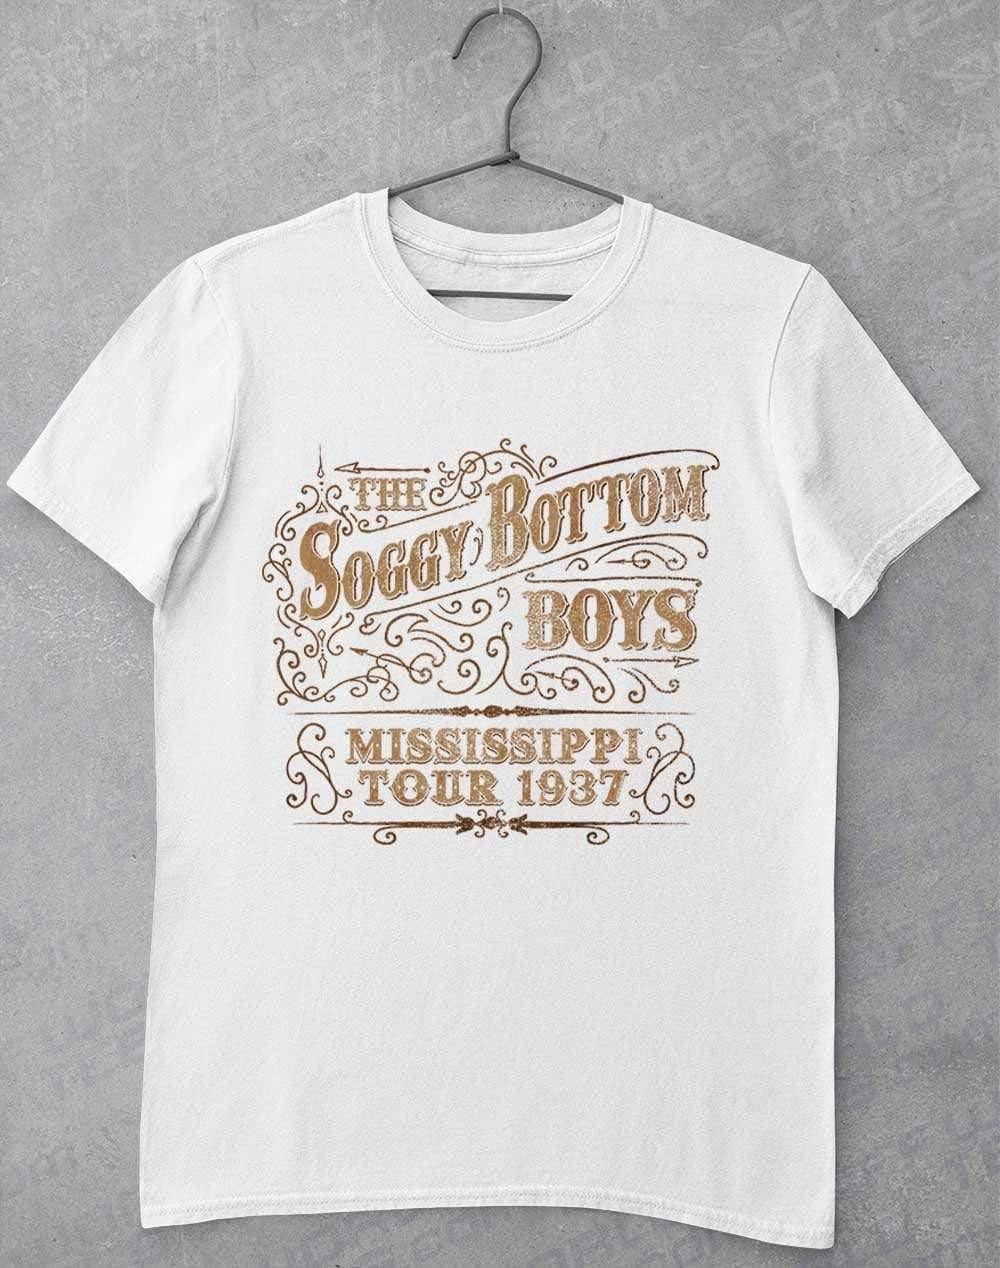 Soggy Bottom Boys Tour 1937 T-Shirt S / White  - Off World Tees